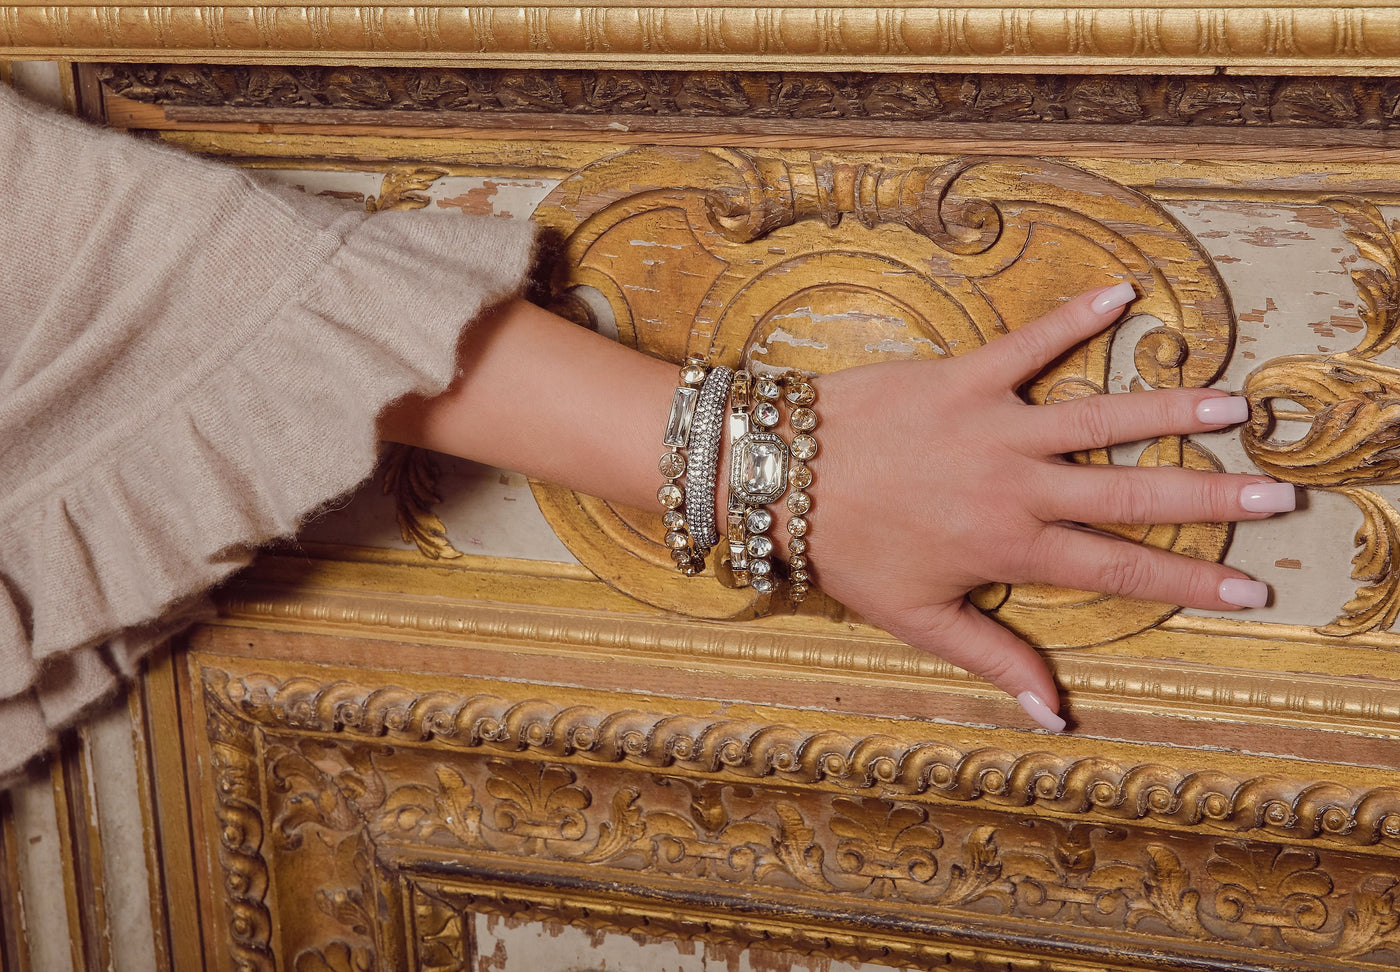 Heidi Daus®"On Line" Emerald Cut Crystal Layout Bracelet